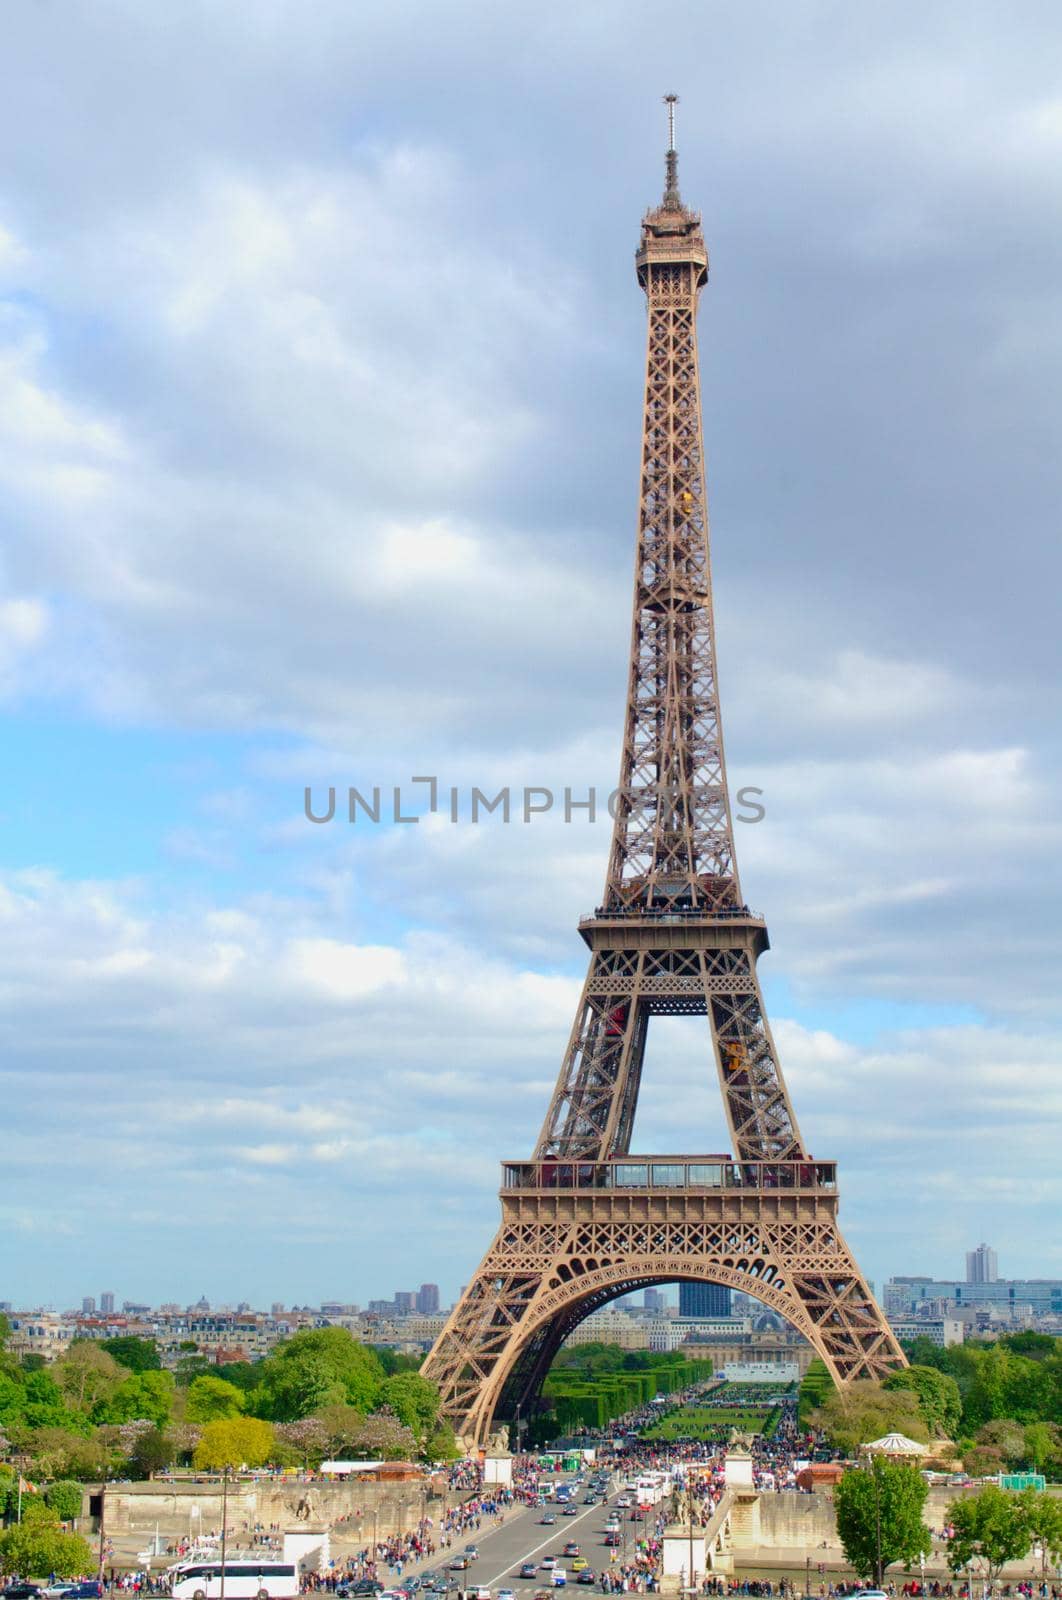 The Eiffel Tower seen from the Place du Trocadero by hernan_hyper